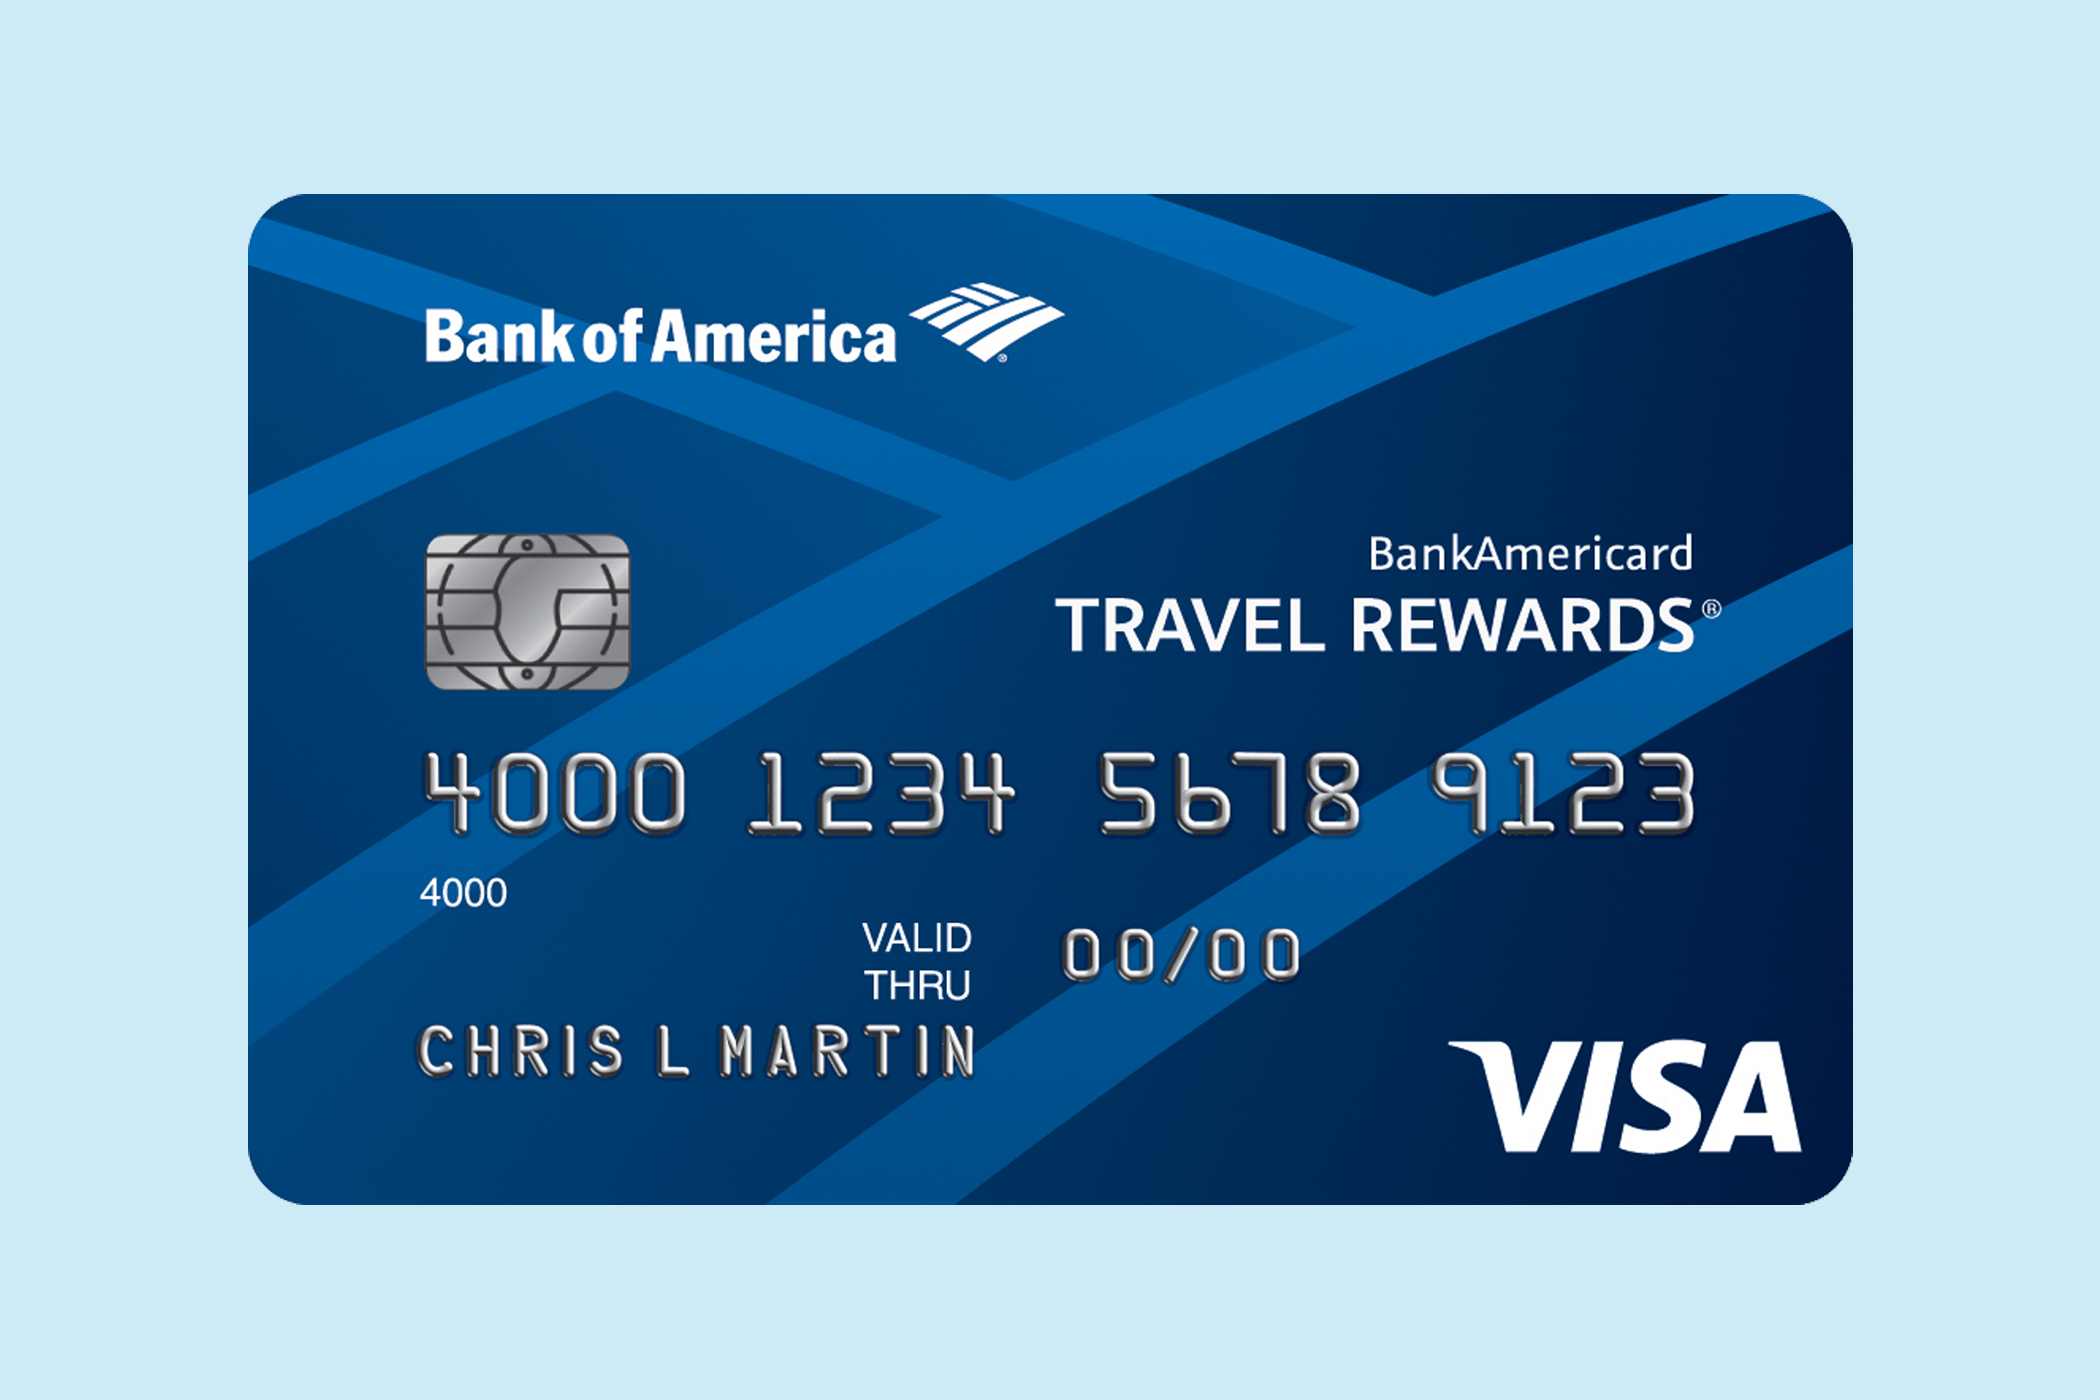 T me cr3dit card. Банковская карта Bank of America. Американская карта виза. Американская карта банковская. Американские банковские карты visa.